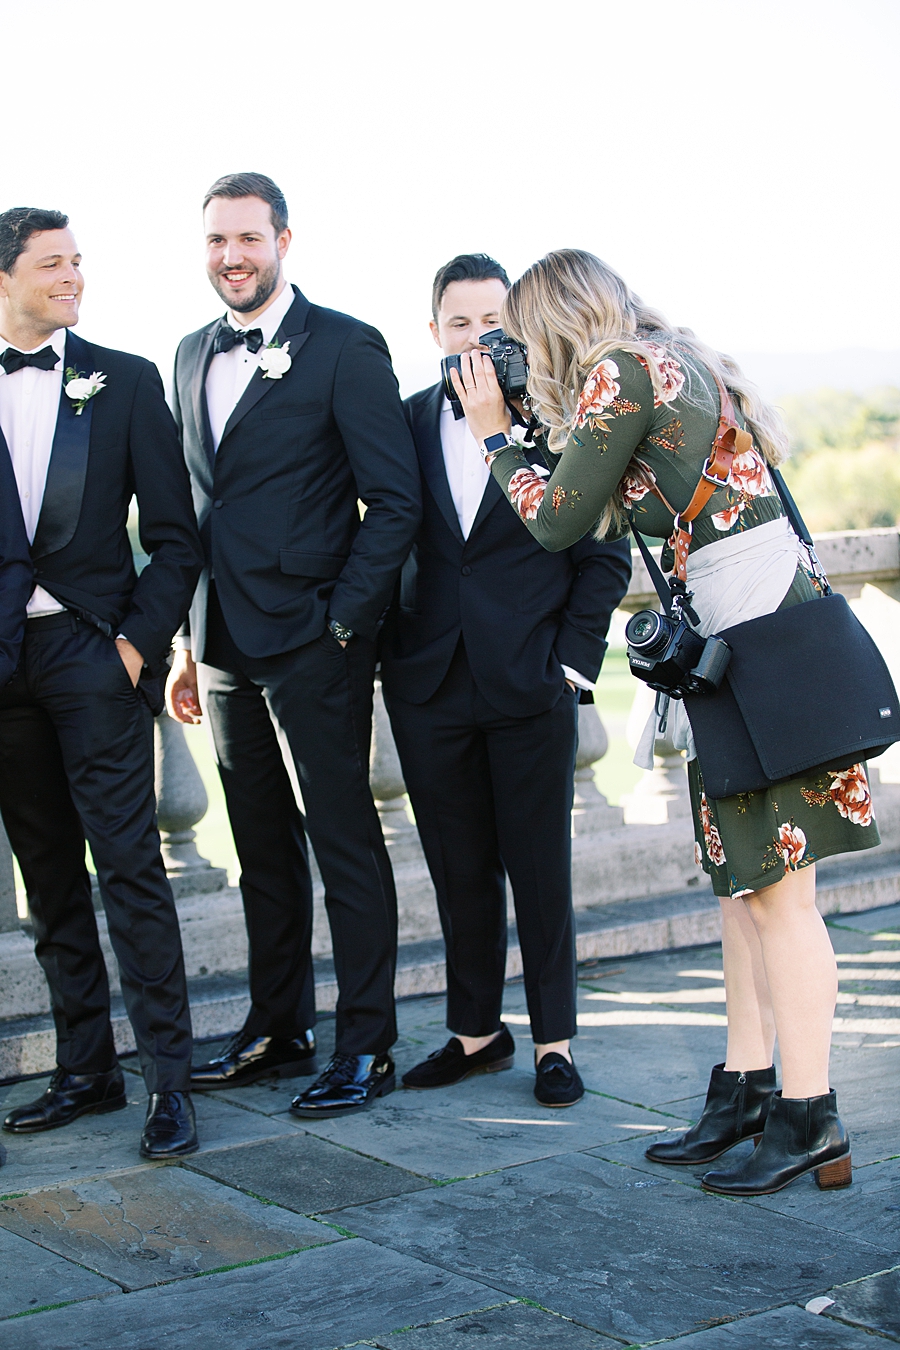 Behind the Scenes for North Carolina Wedding Photographer